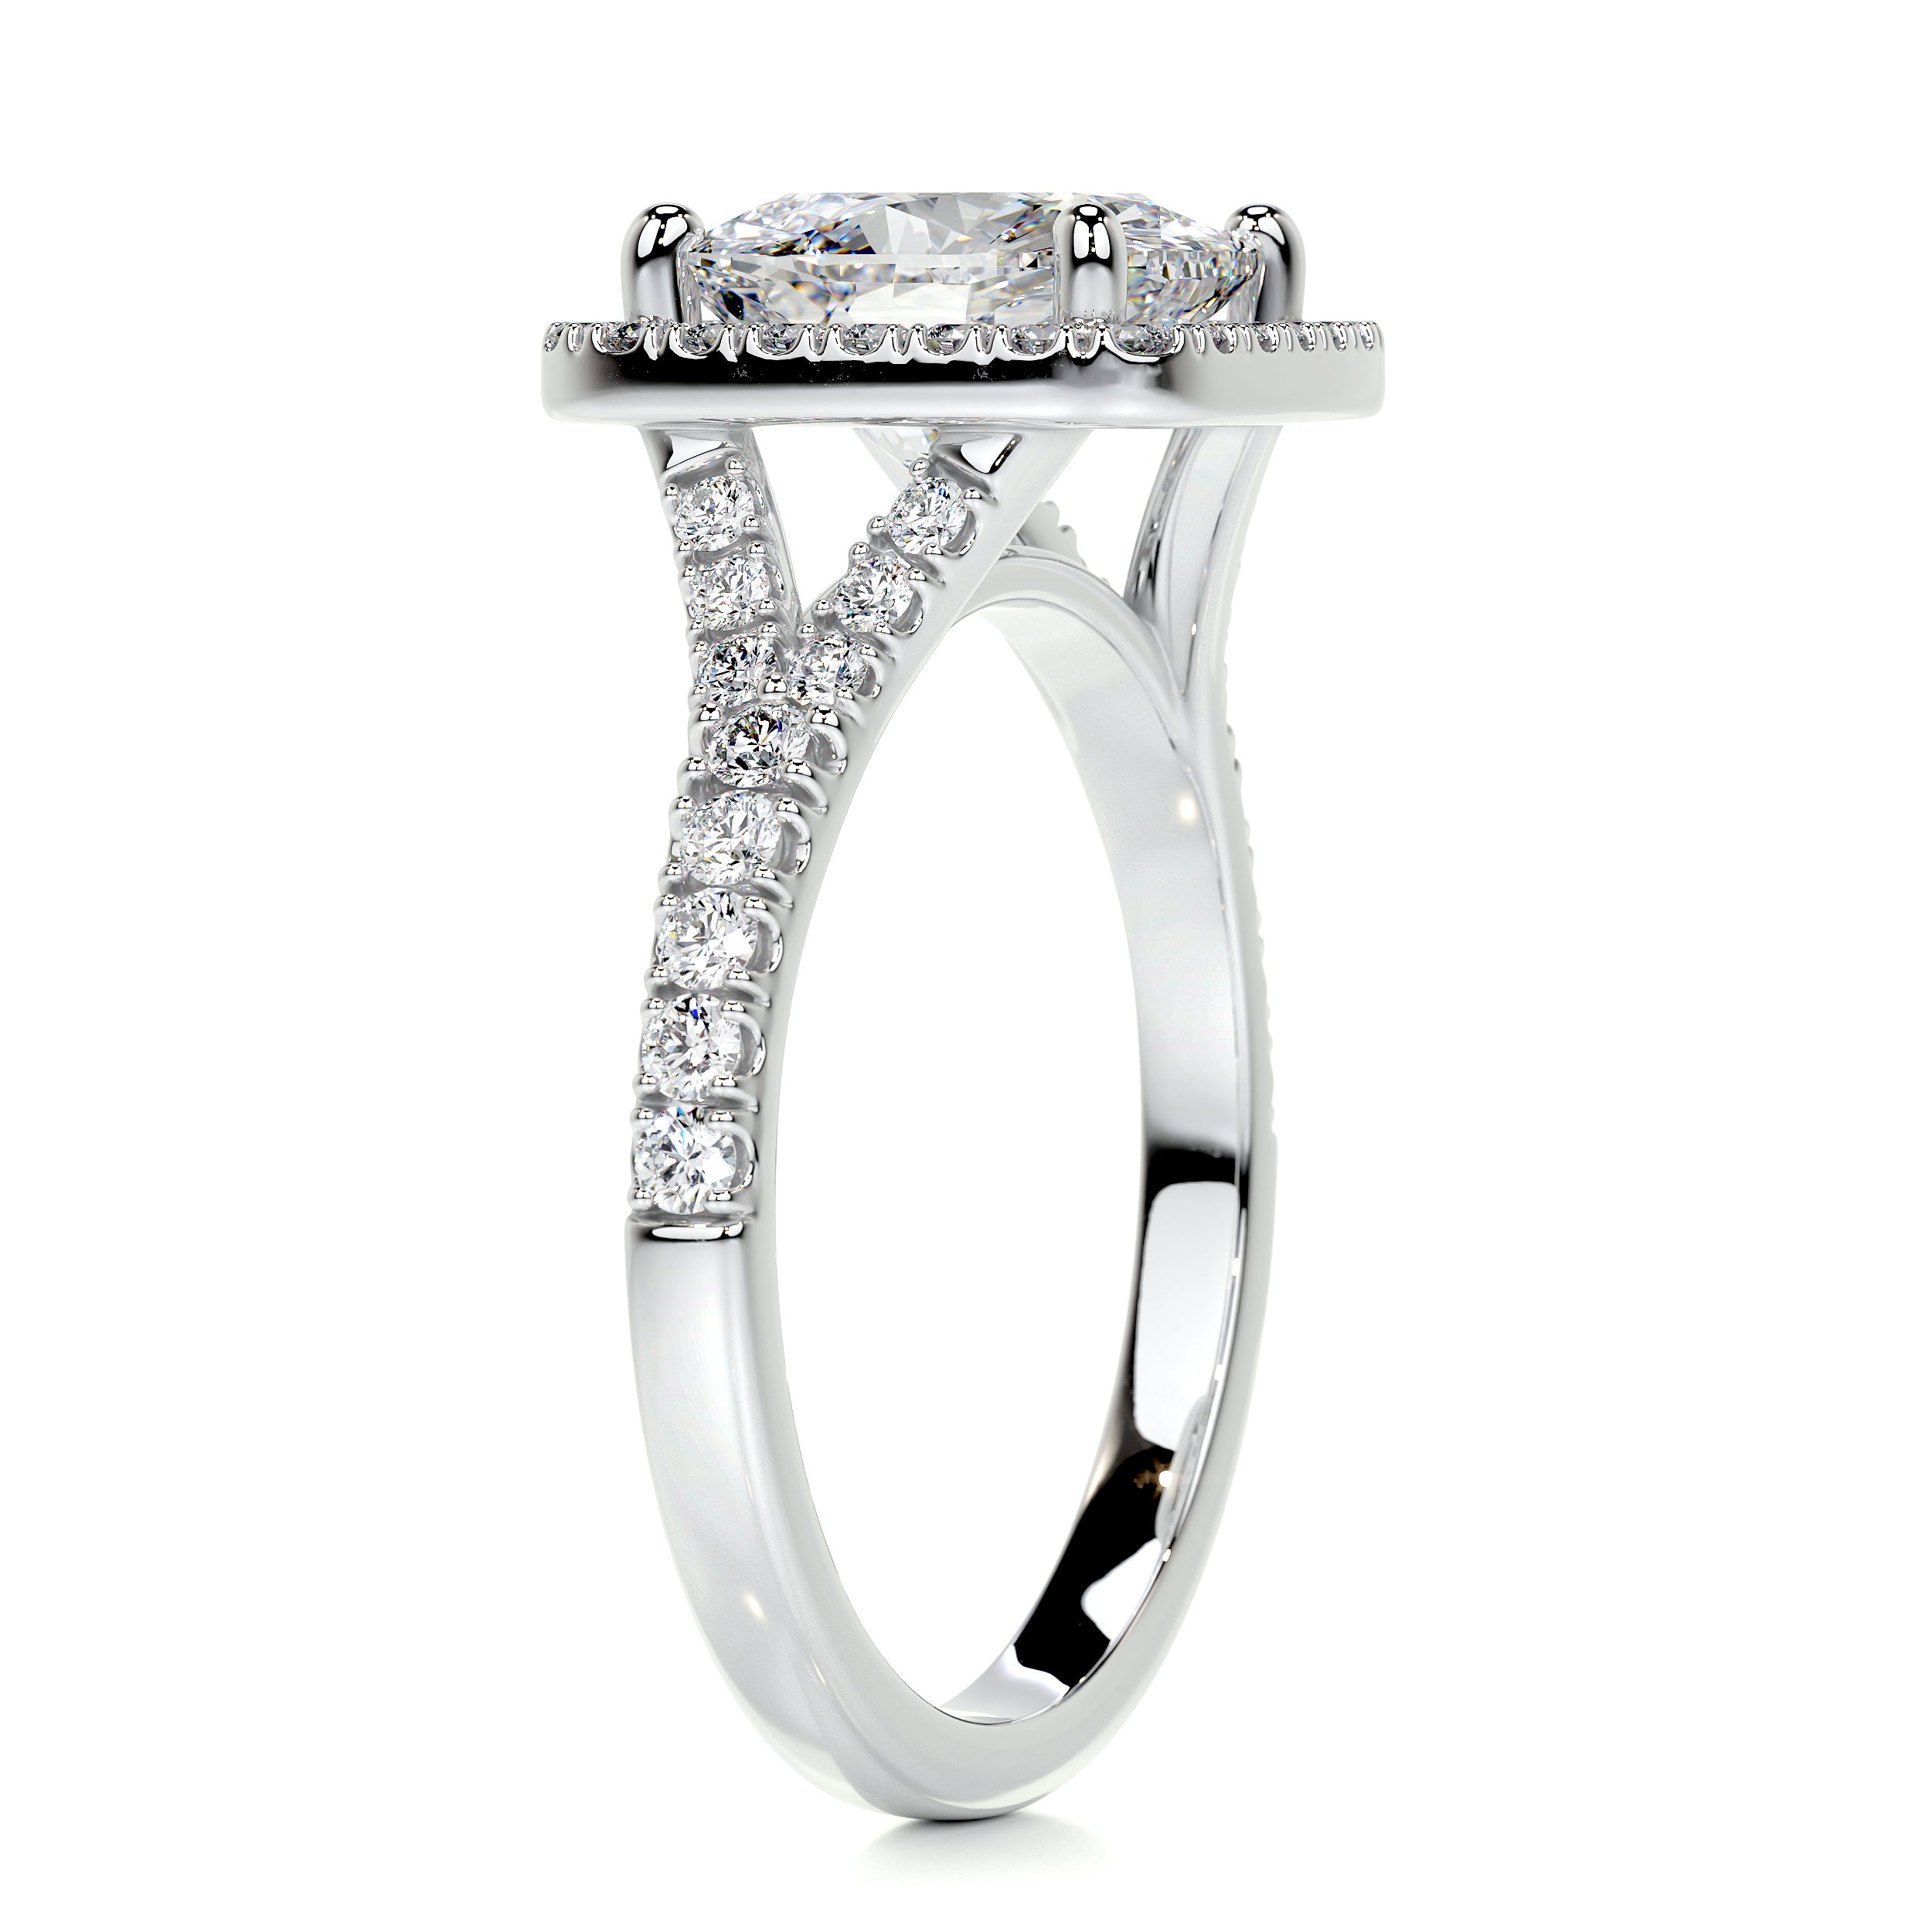 Luciana Diamond Engagement Ring   (3.5 Carat) -18K White Gold